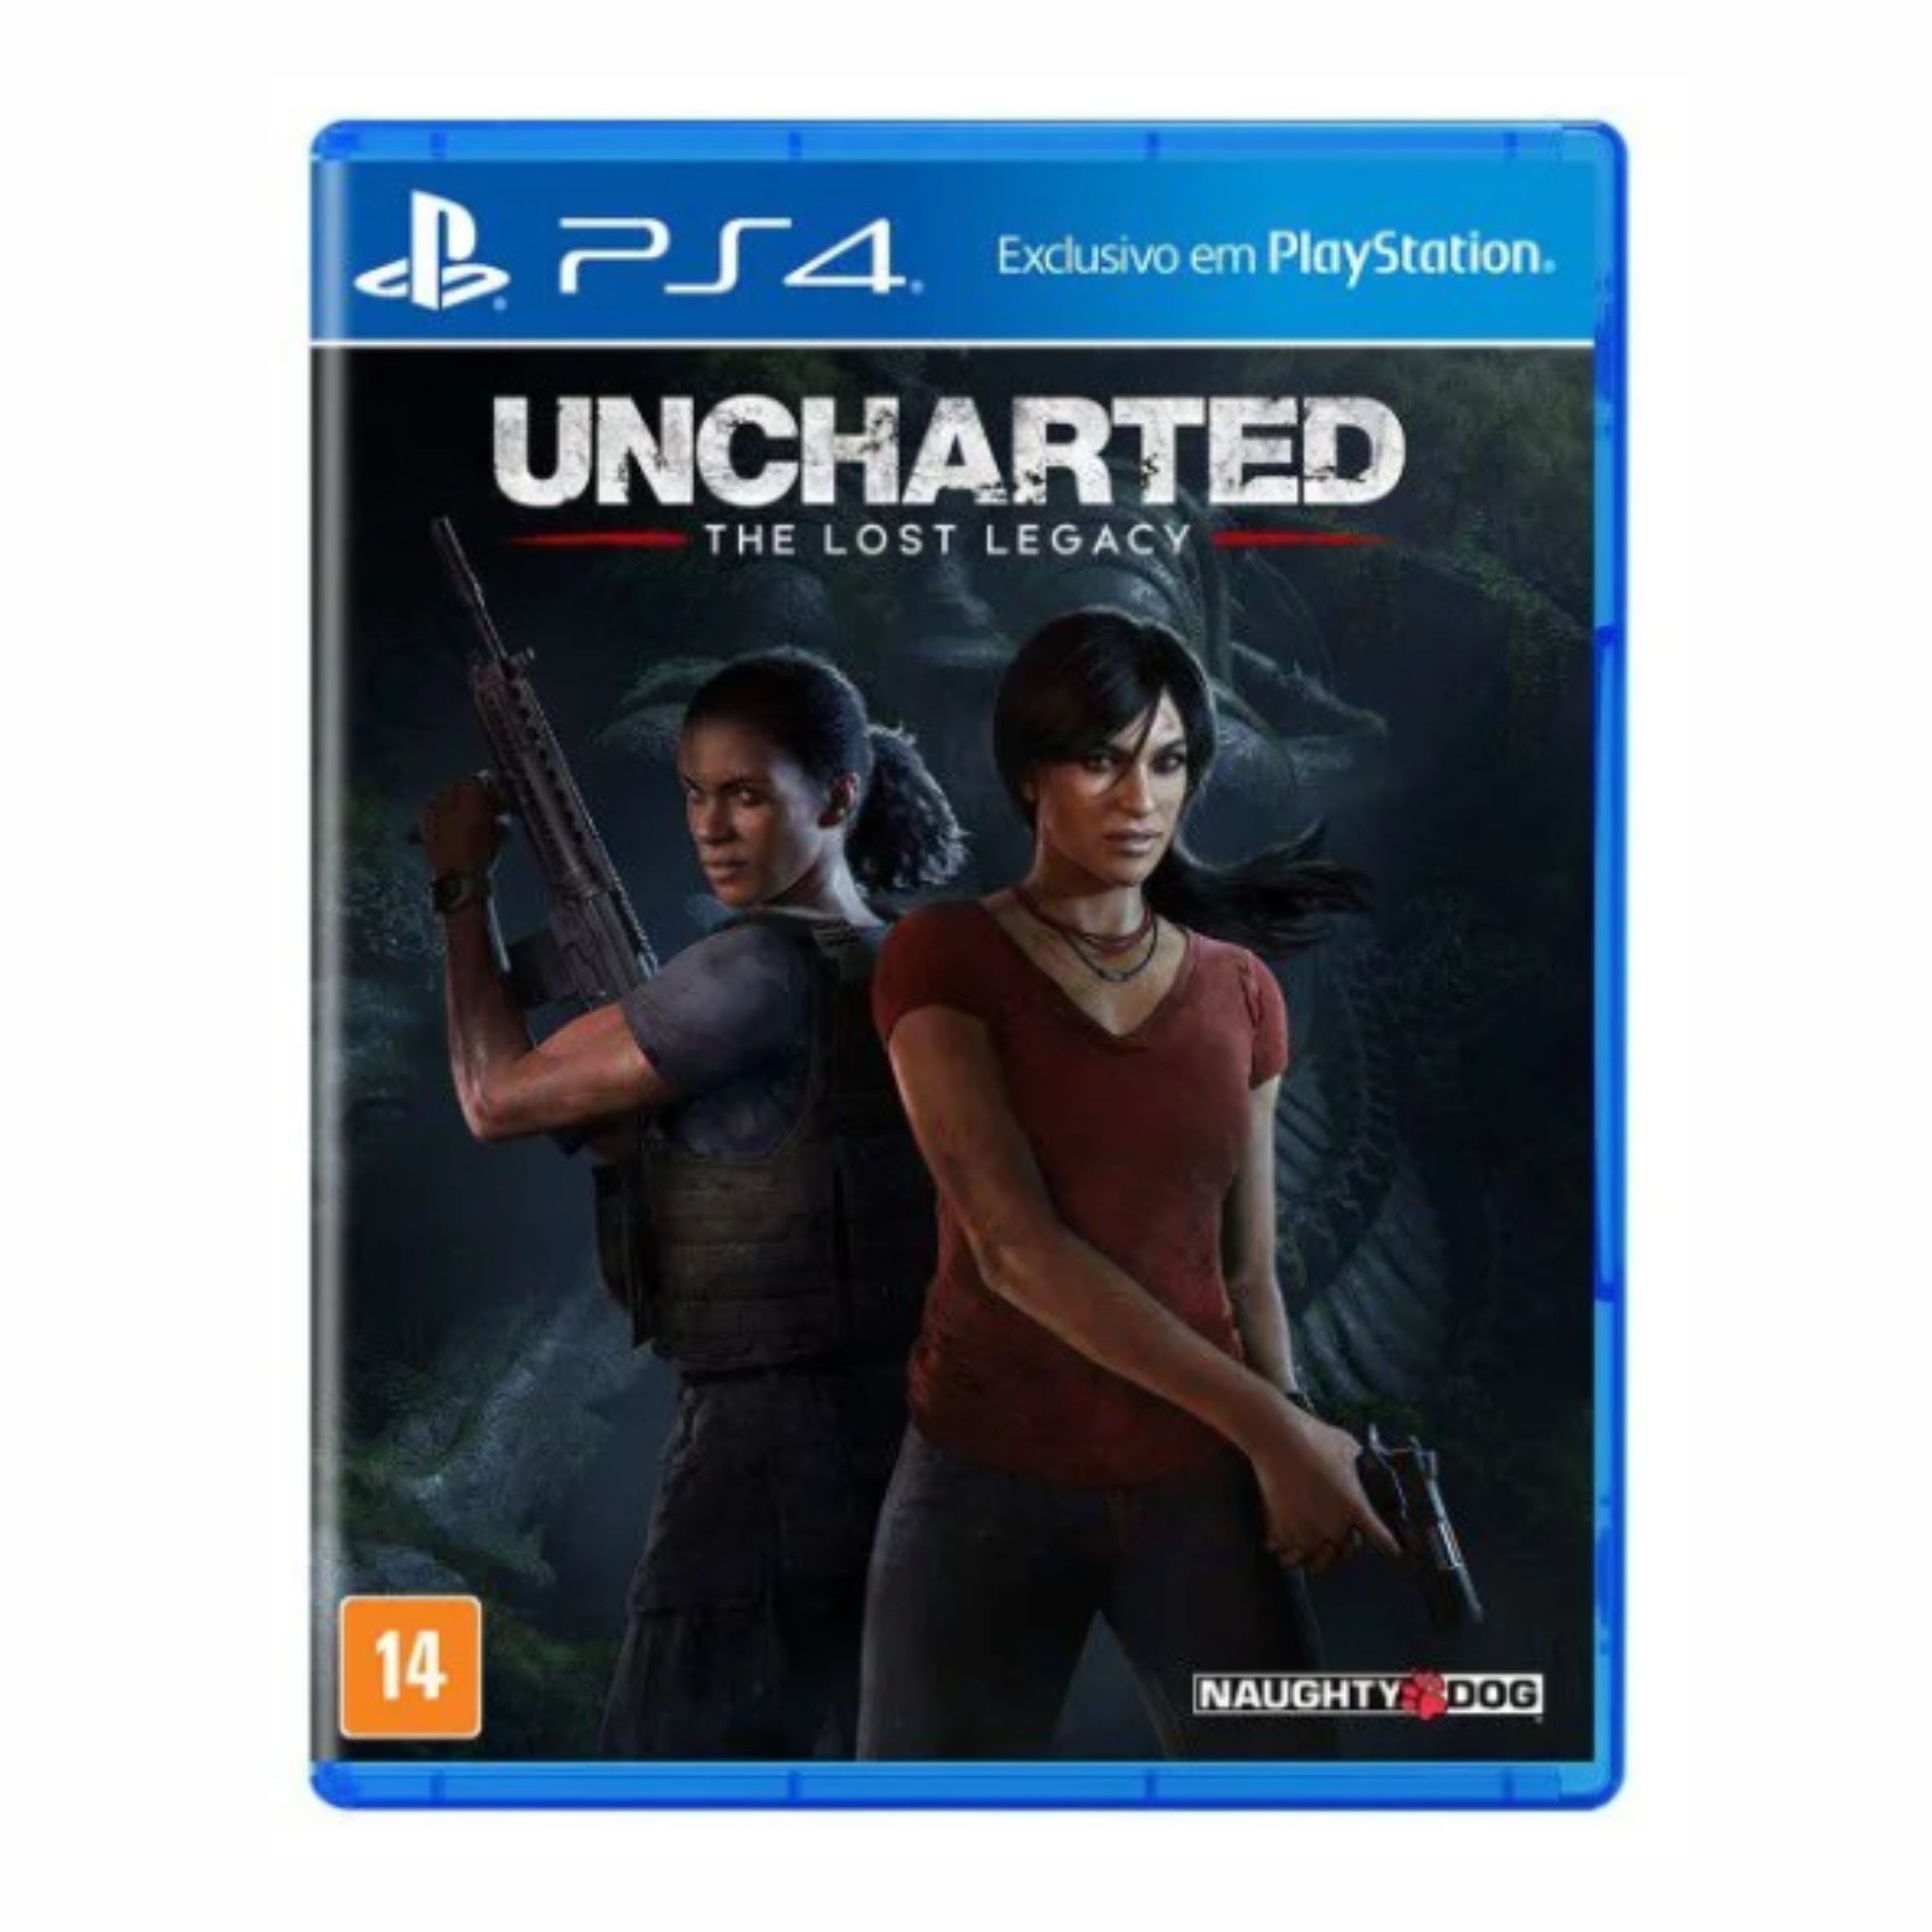 Uncharted 4 A Thief's End - PS4 (SEMI-NOVO)